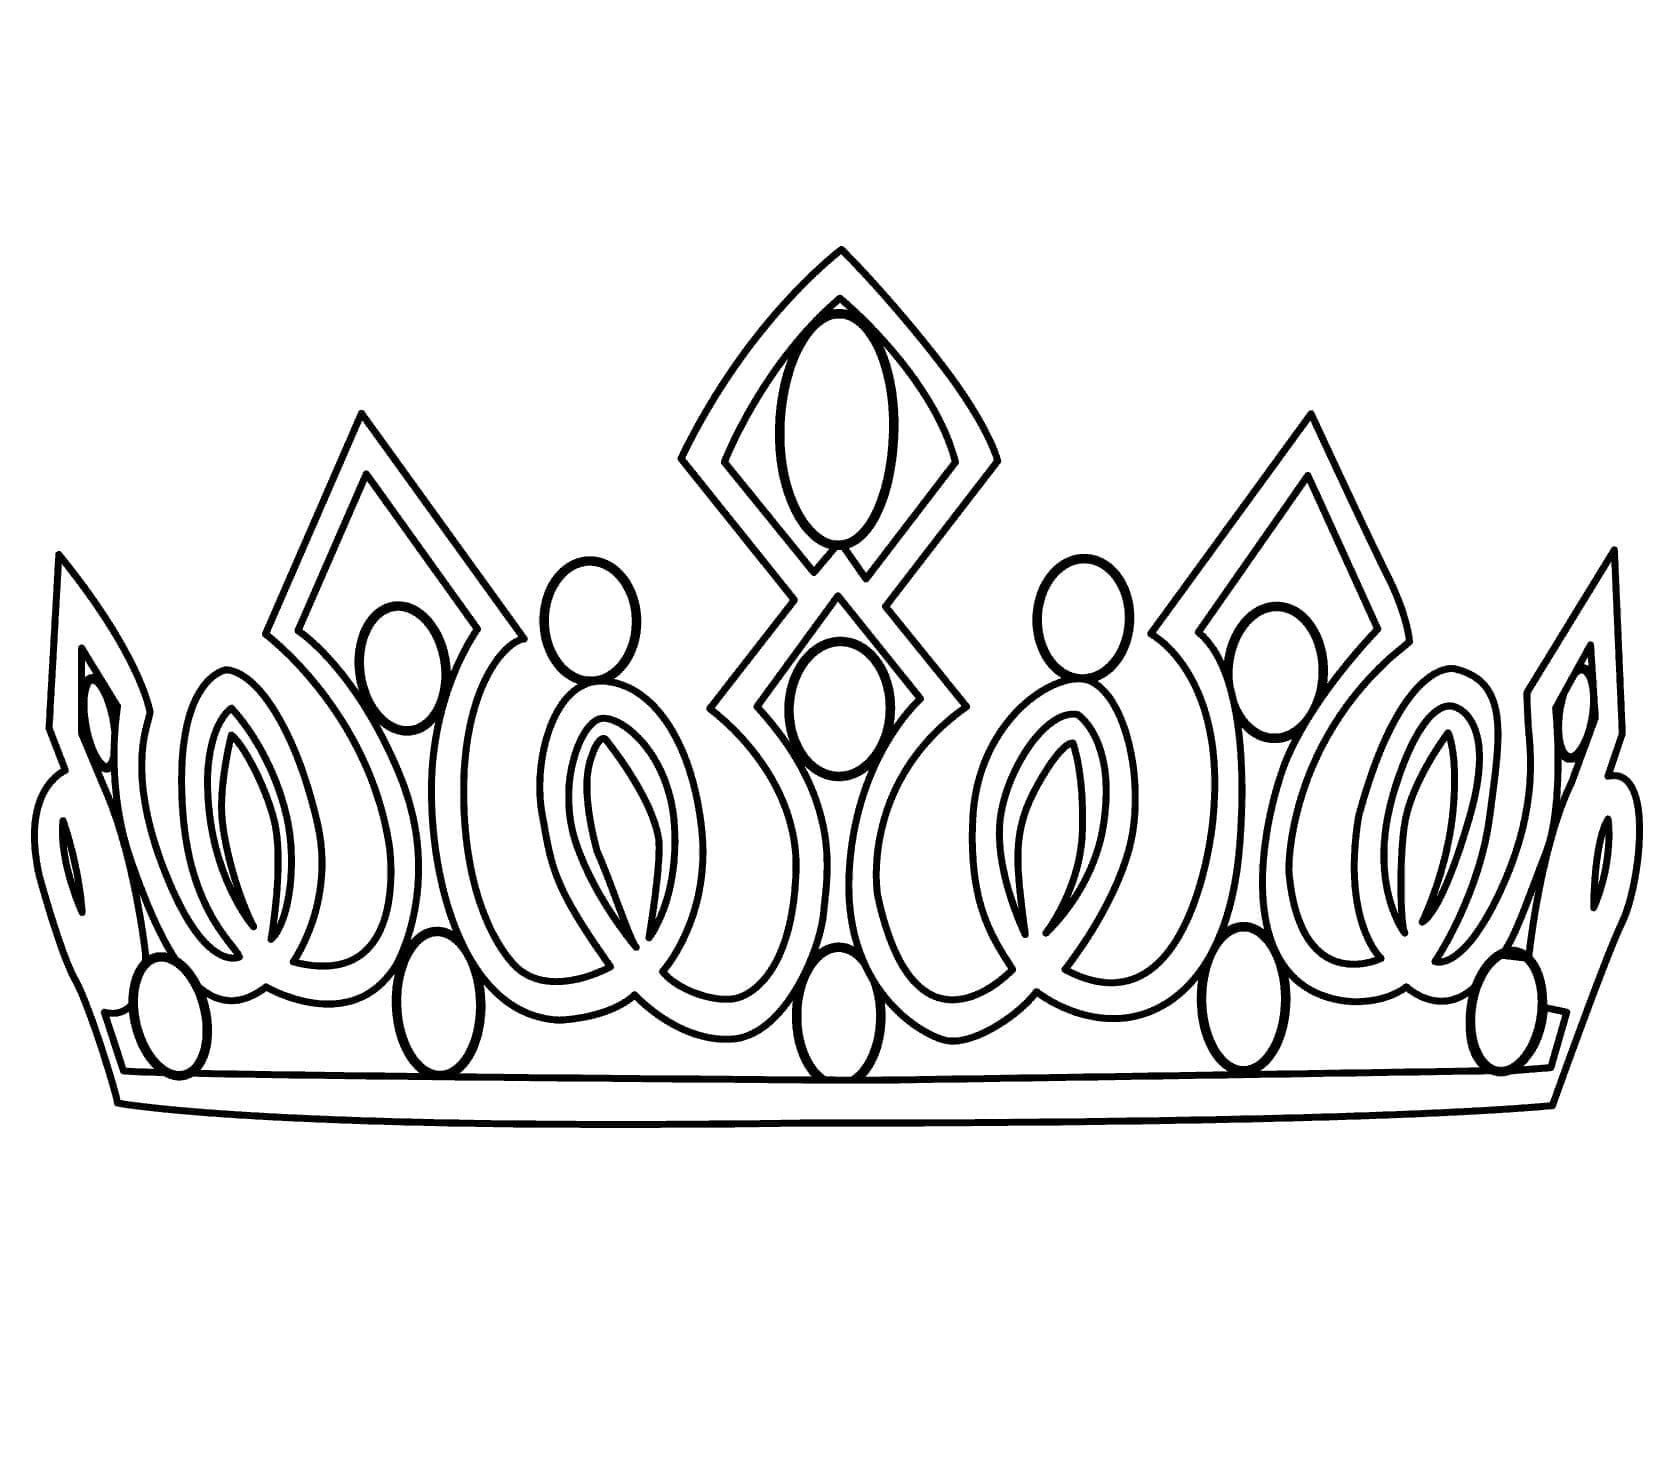 Målarbild Prinsesskrona